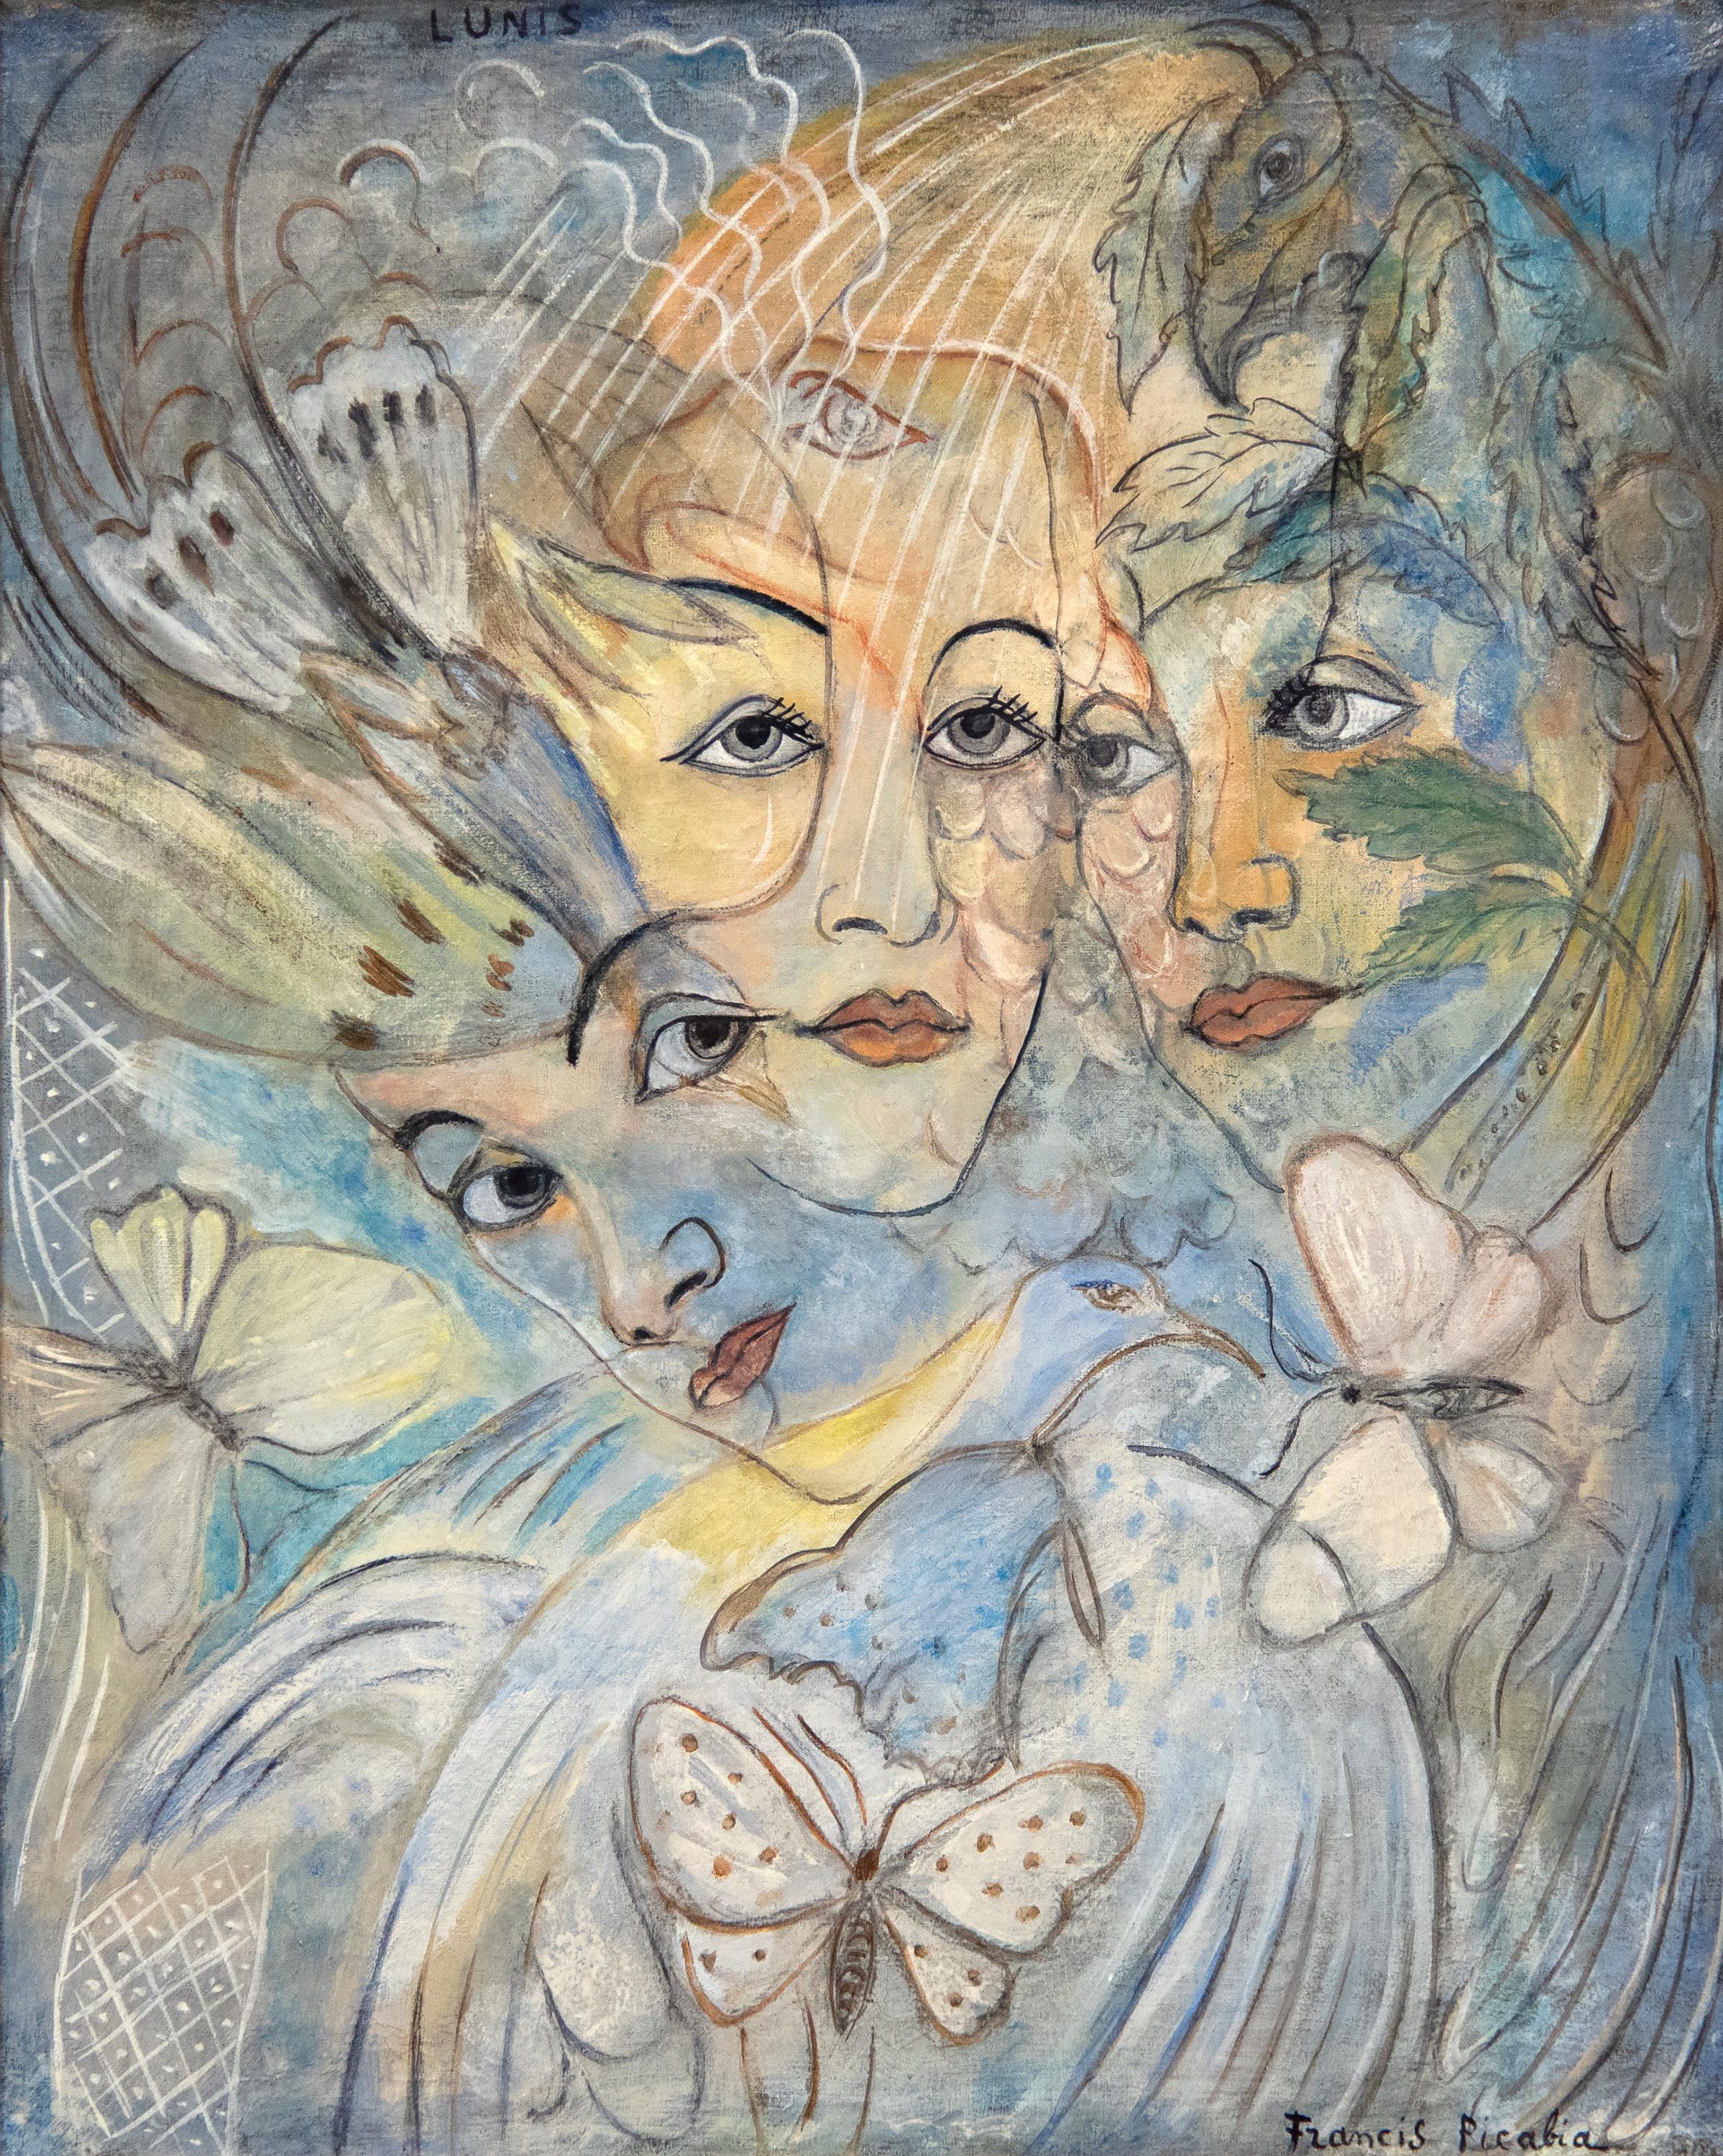 Francis Picabia Portrait Painting - Lunis